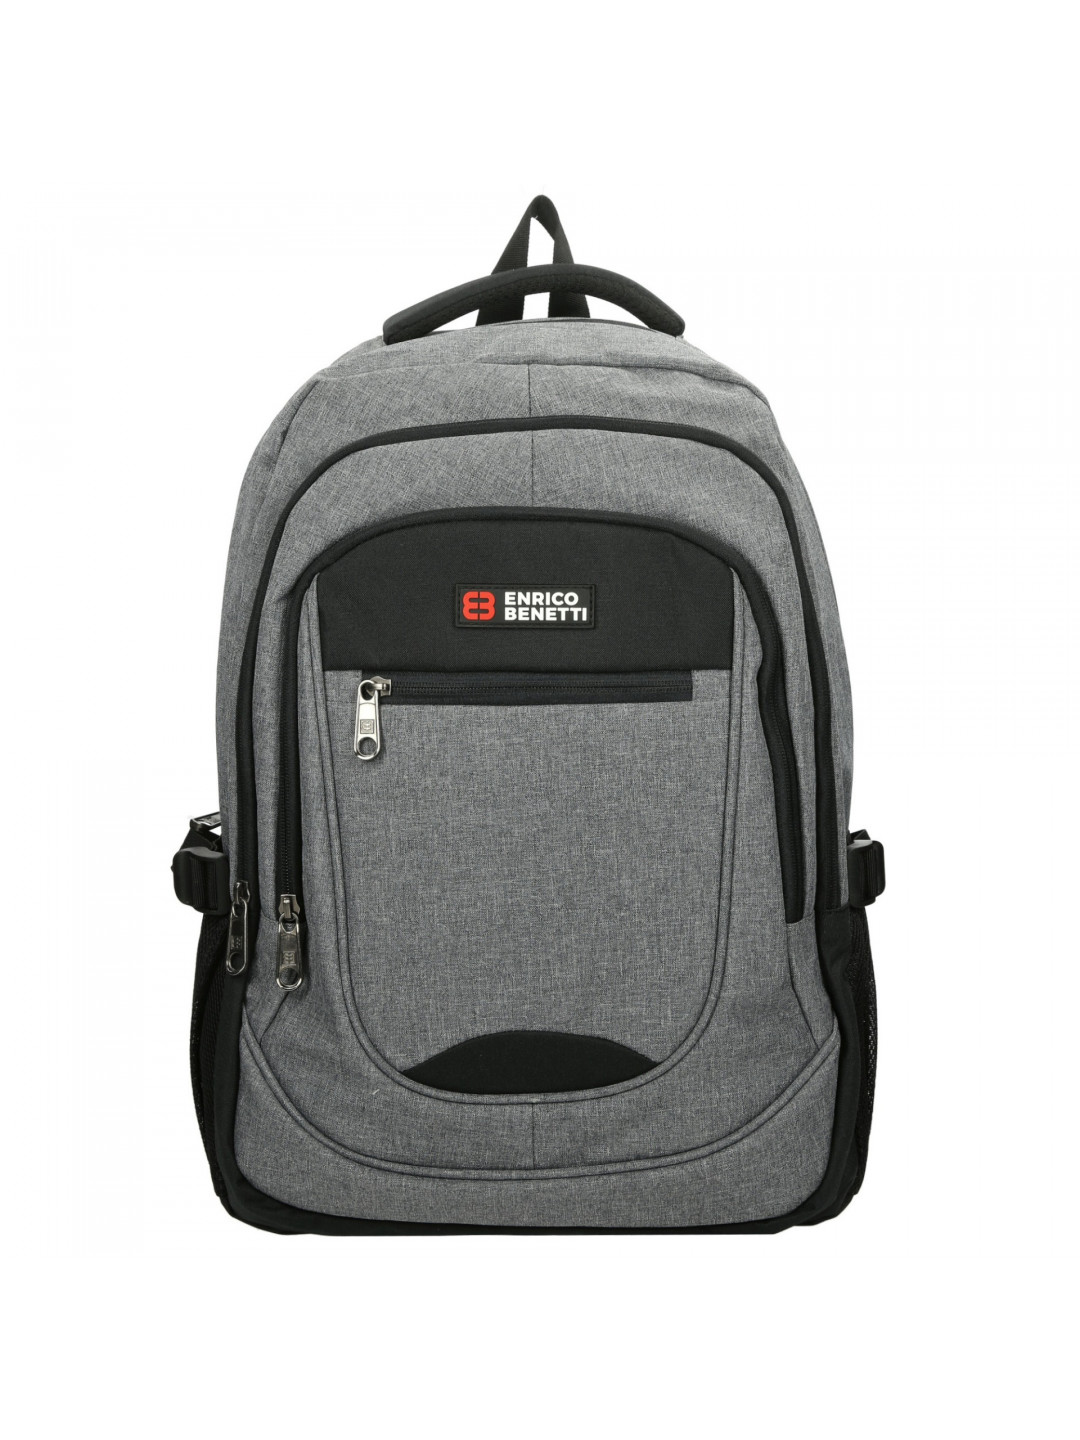 Enrico Benetti Hamburg Notebook Backpack 35 5 l Light Grey